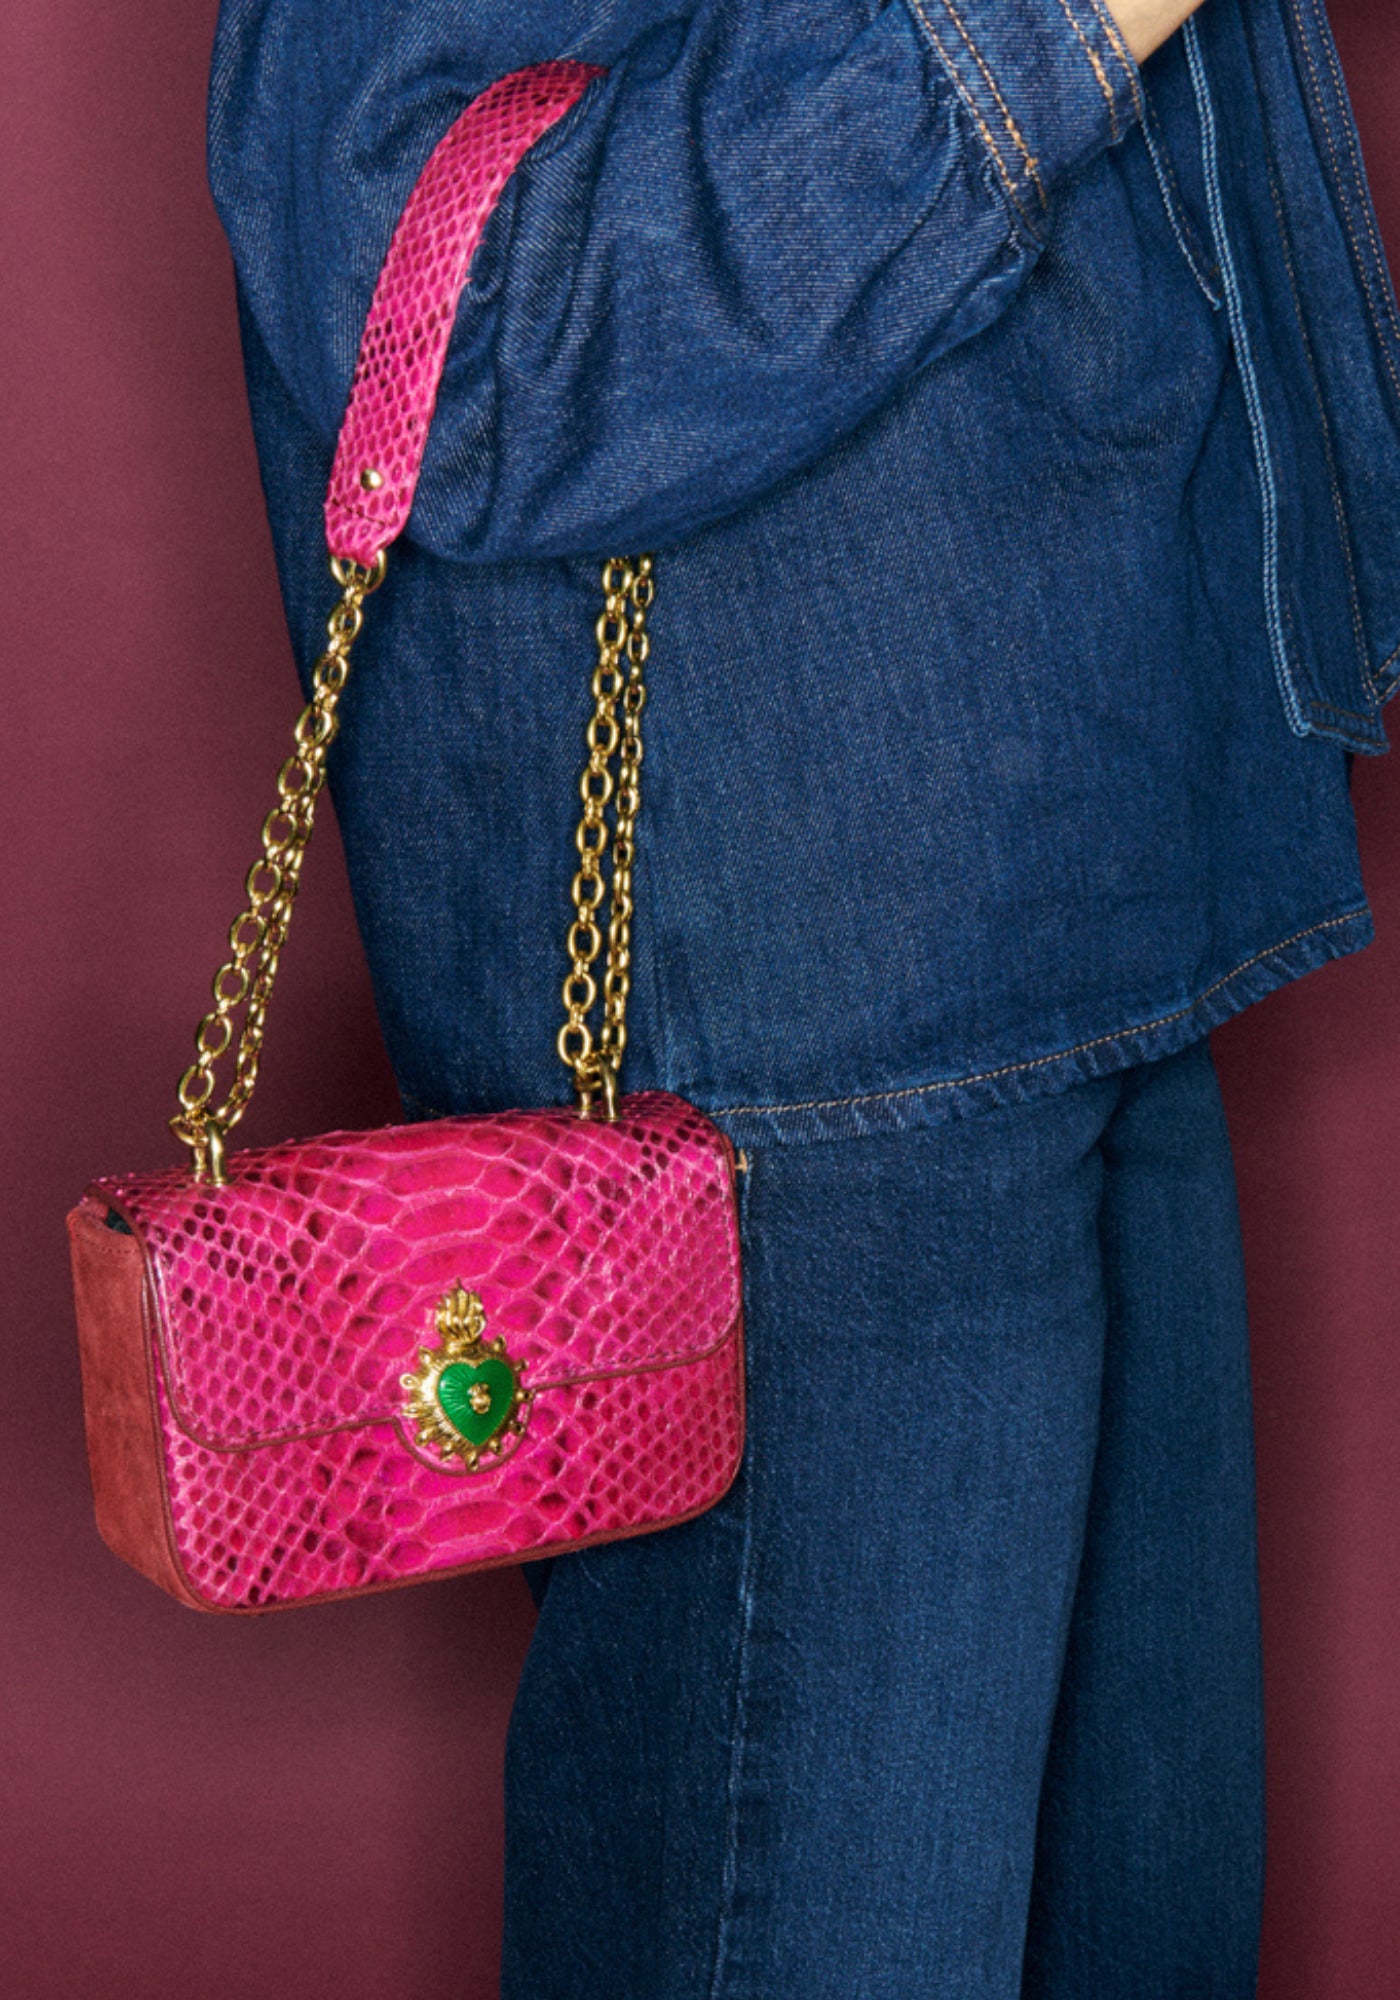 La femme porte le sac mini Ava celosia rose de chez Claris Virot